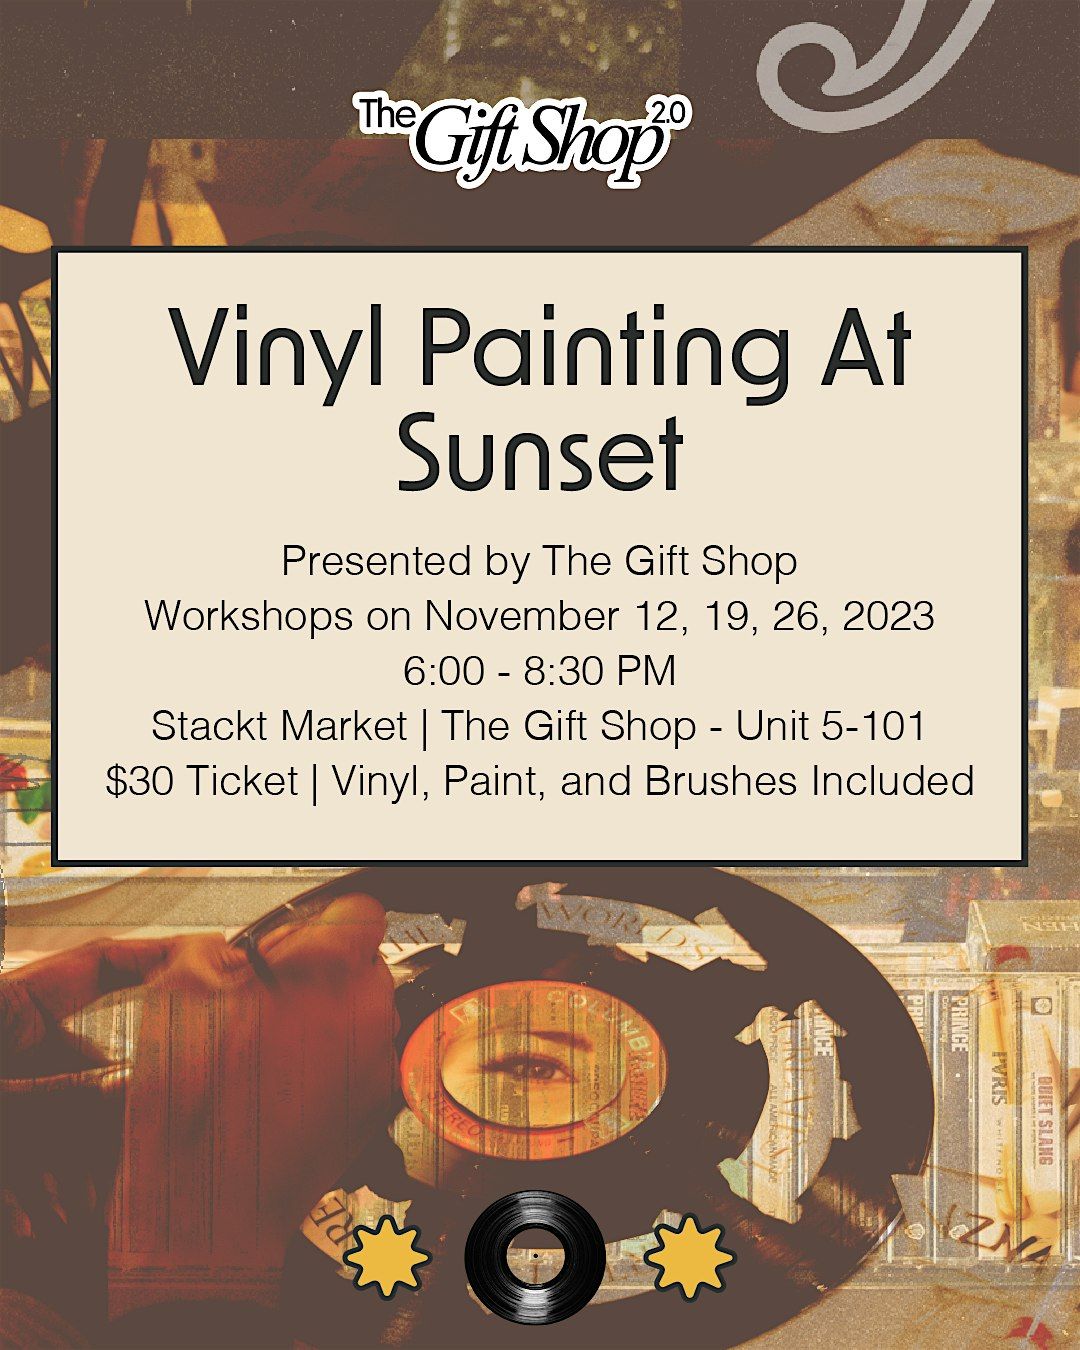 Vinyl Painting at Sunset